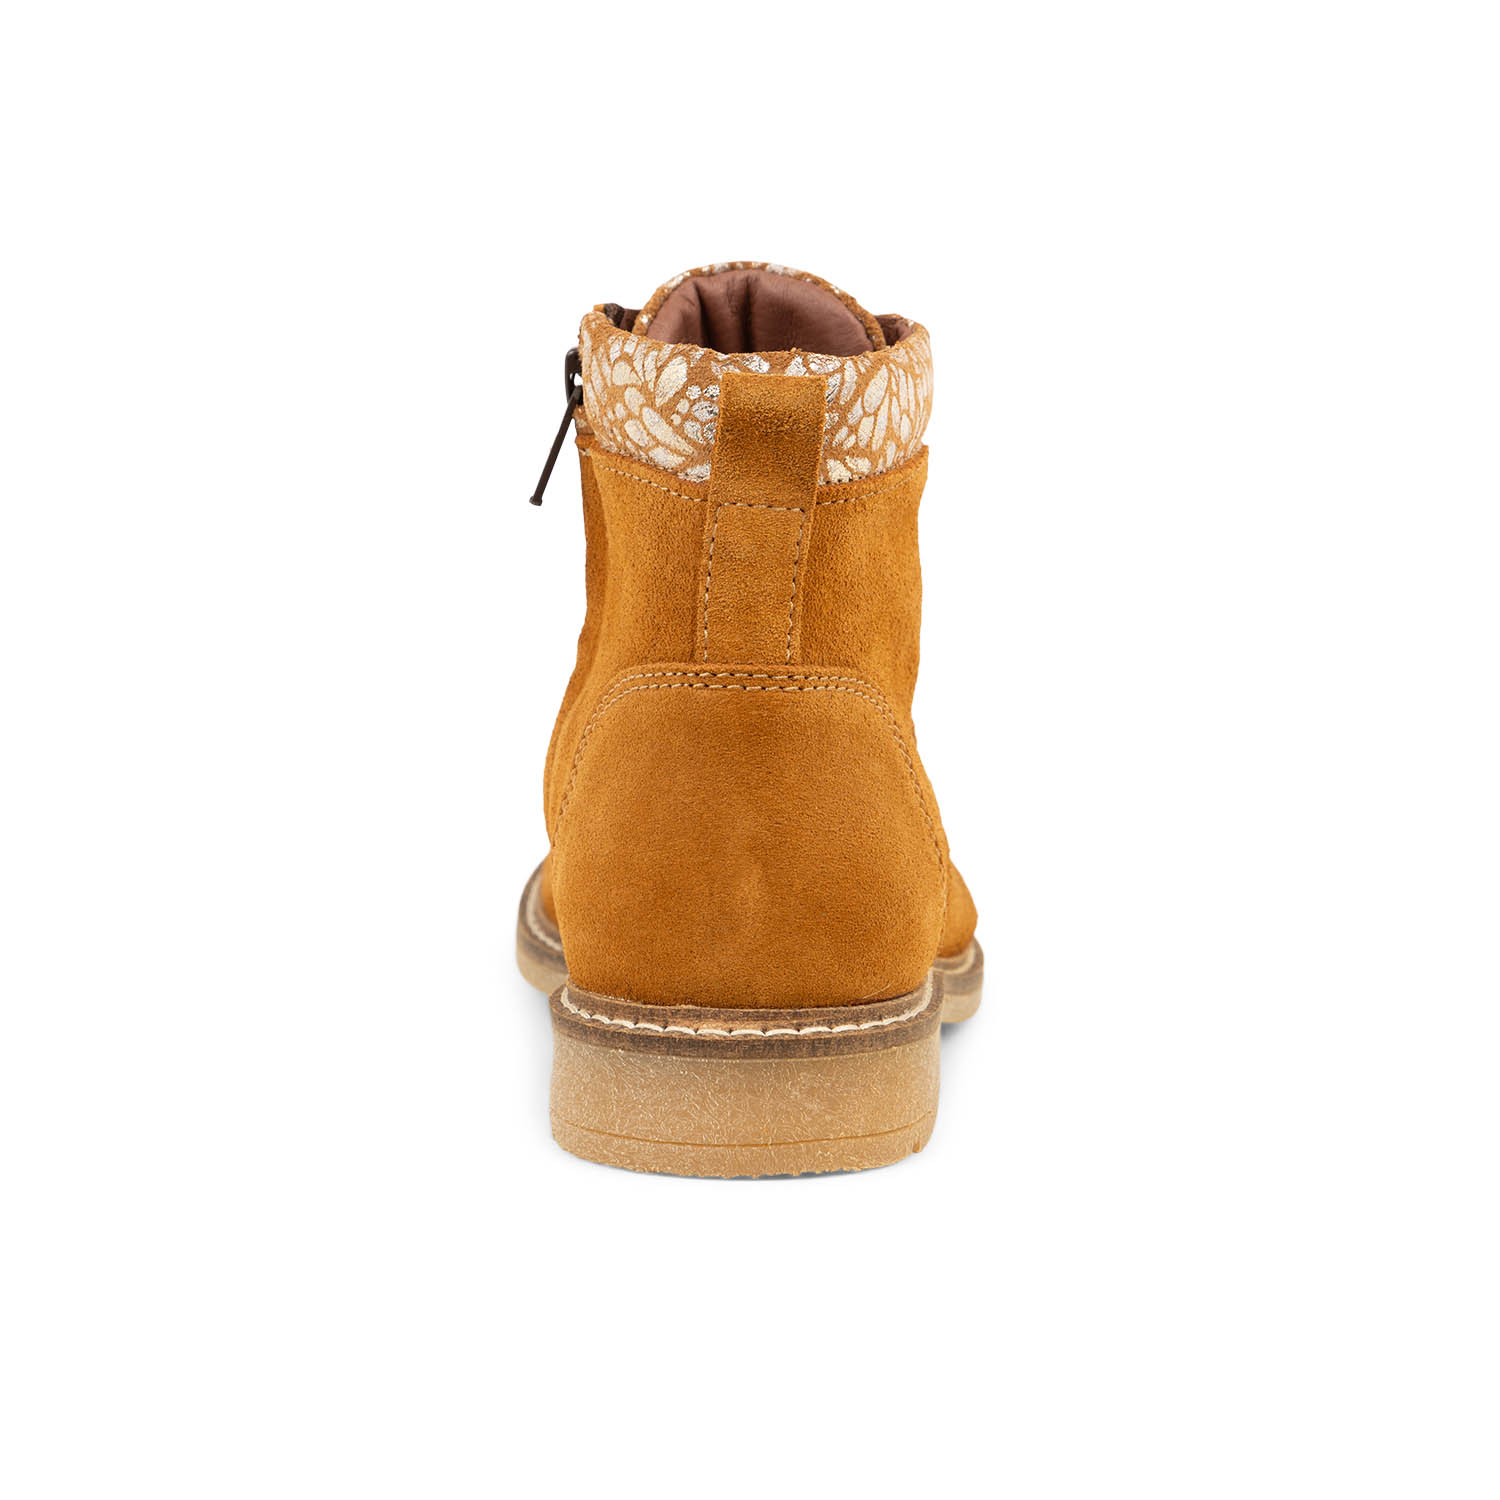 03 - TOISE - BELLAMY - Boots et bottines - Nubuck